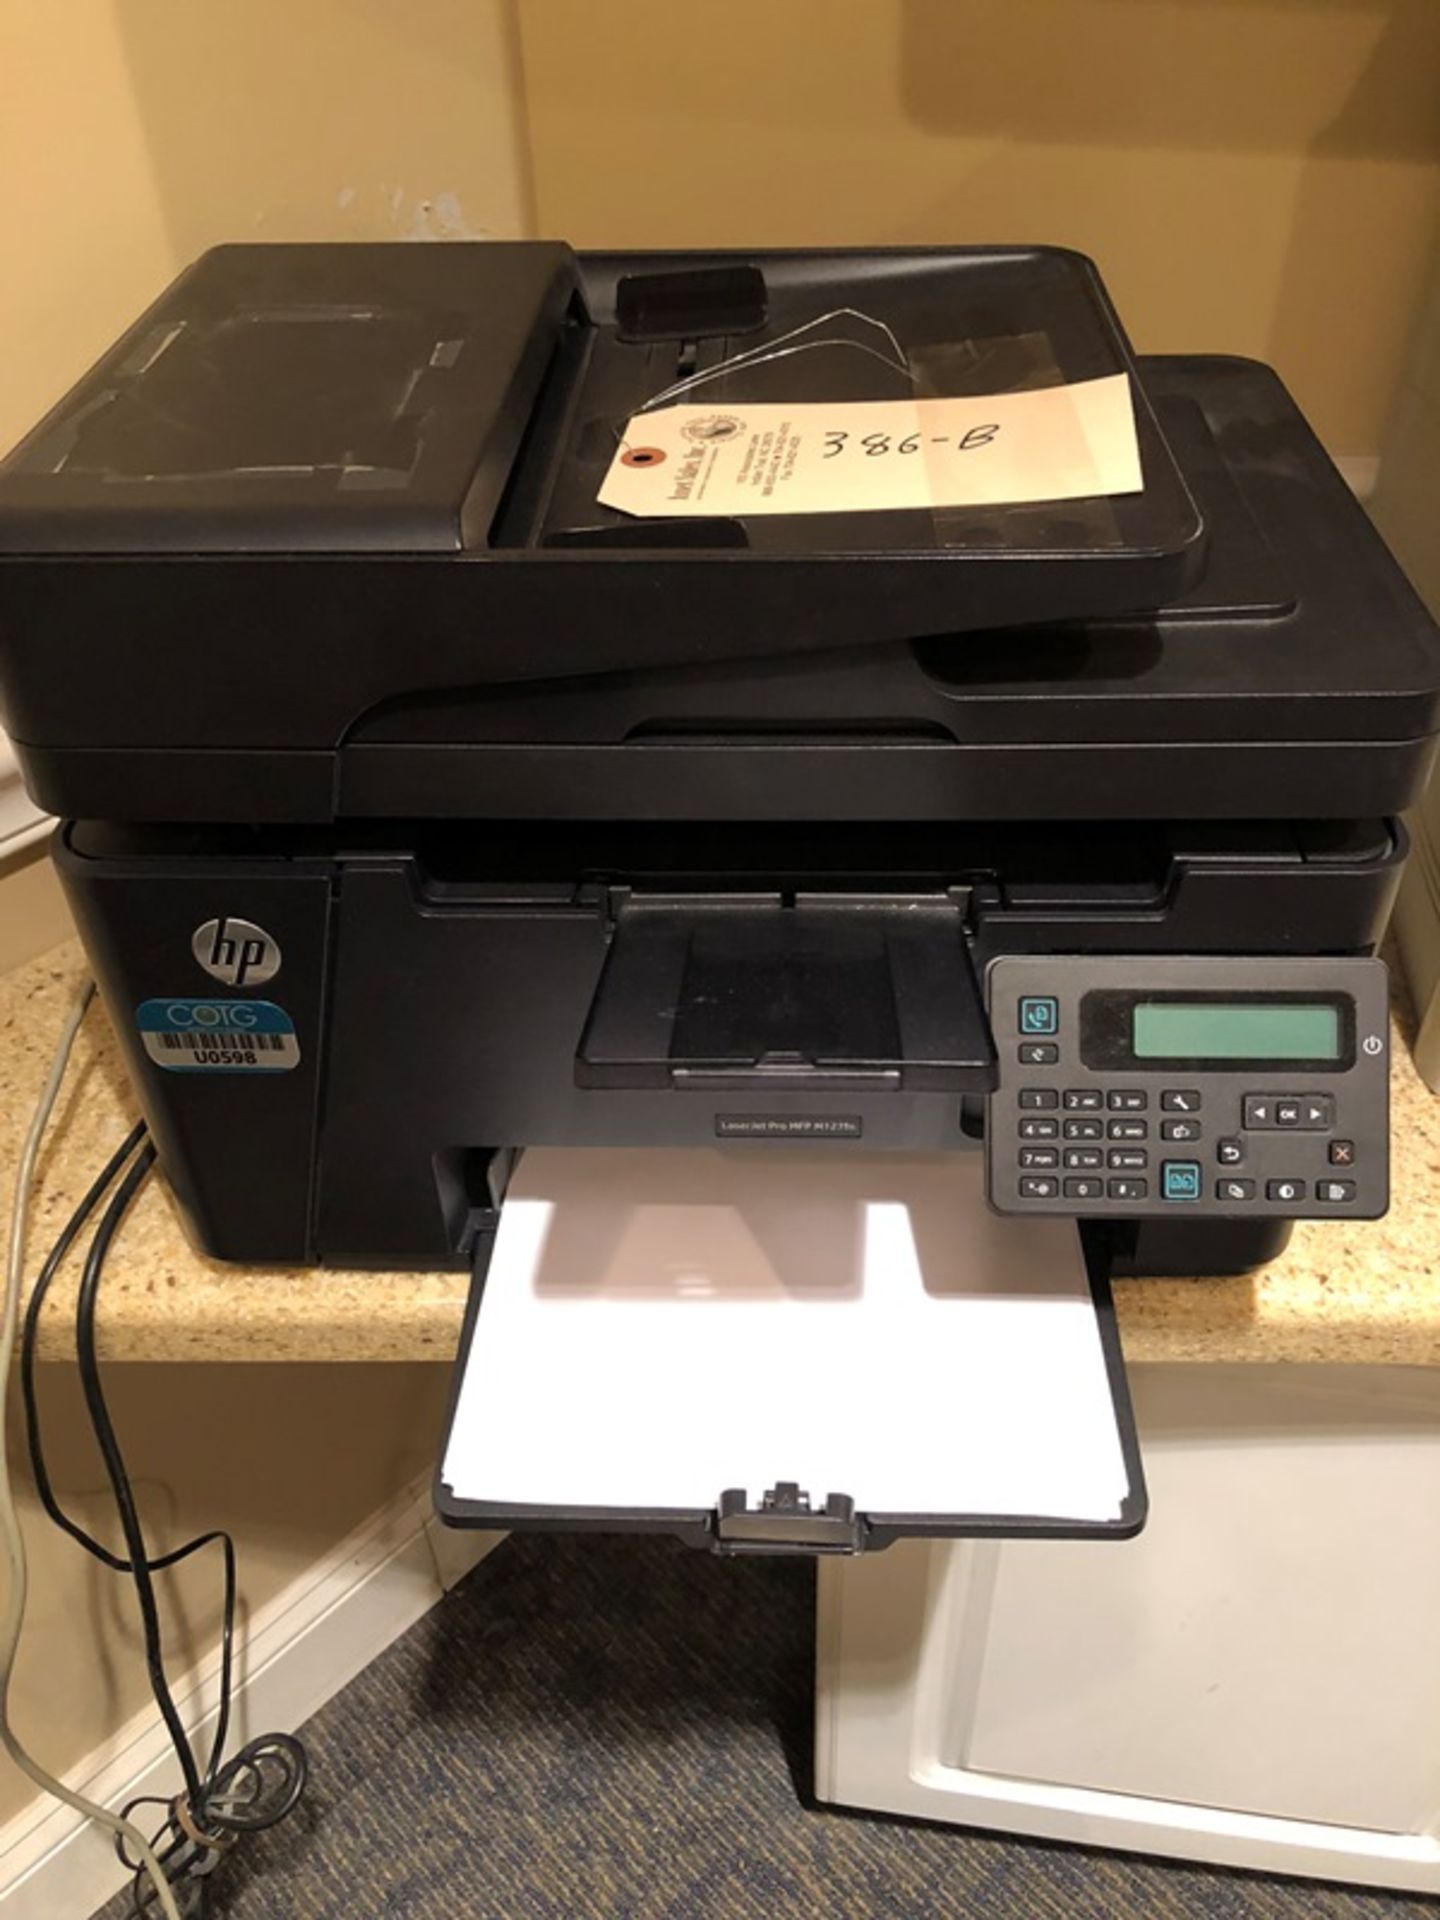 HP LaserJet Pro M127fn Multi Function Printer *located Orland Park, IL